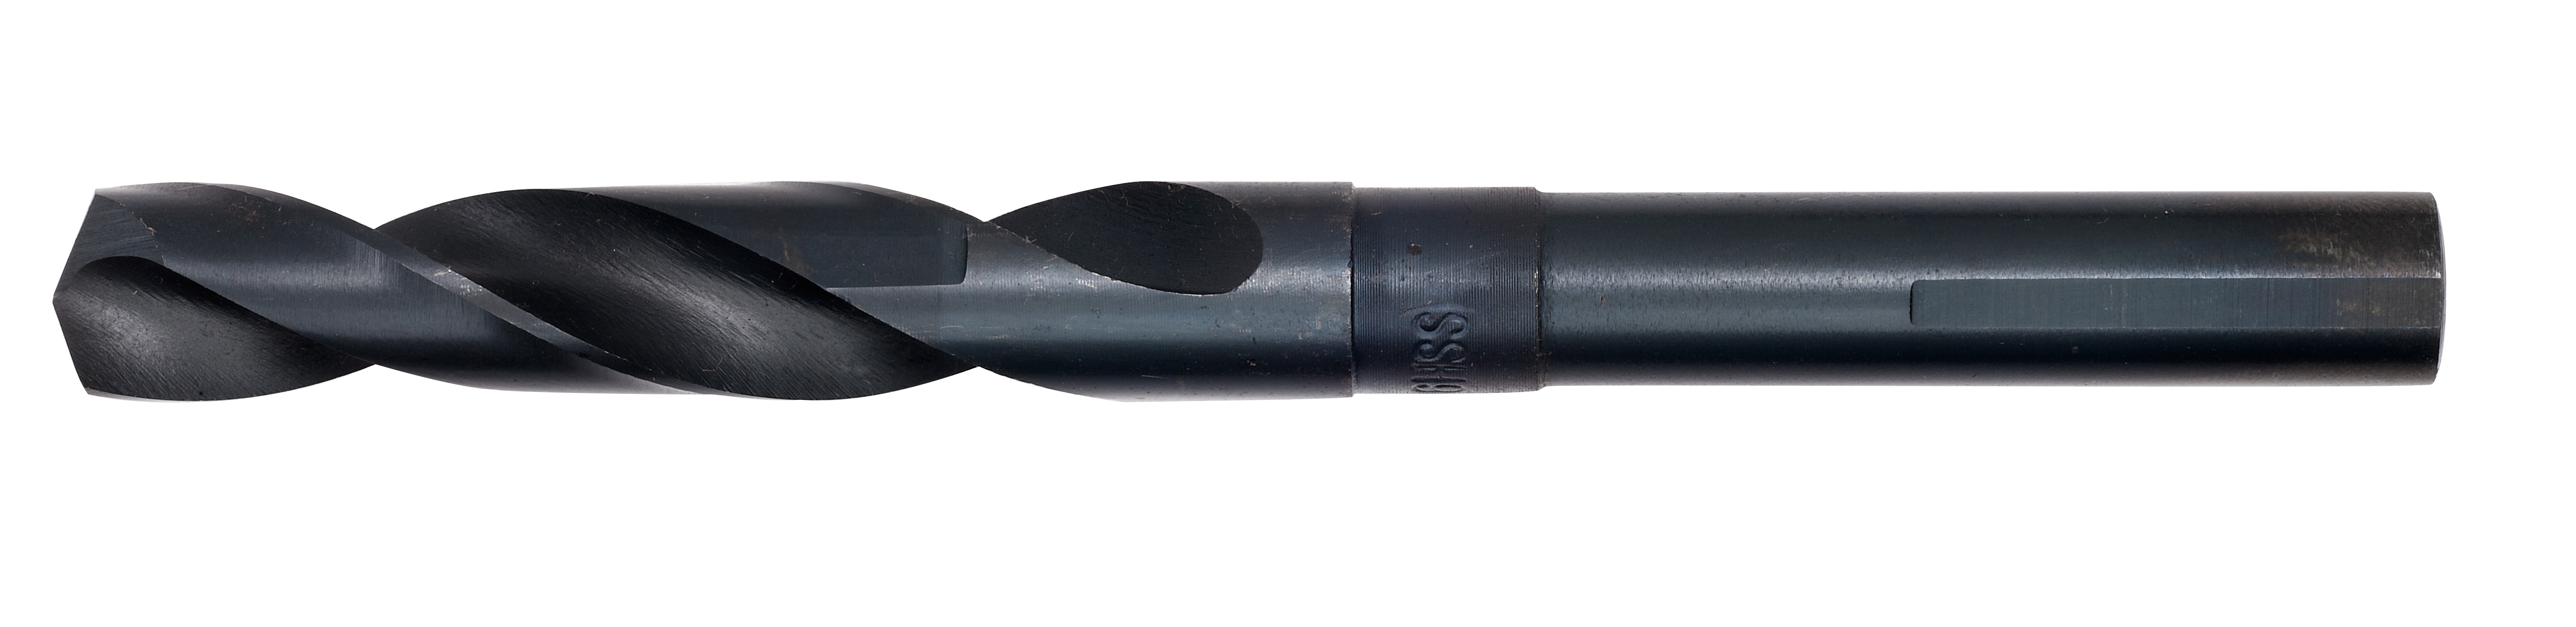 9/16 in. S&D Black Oxide Drill Bit